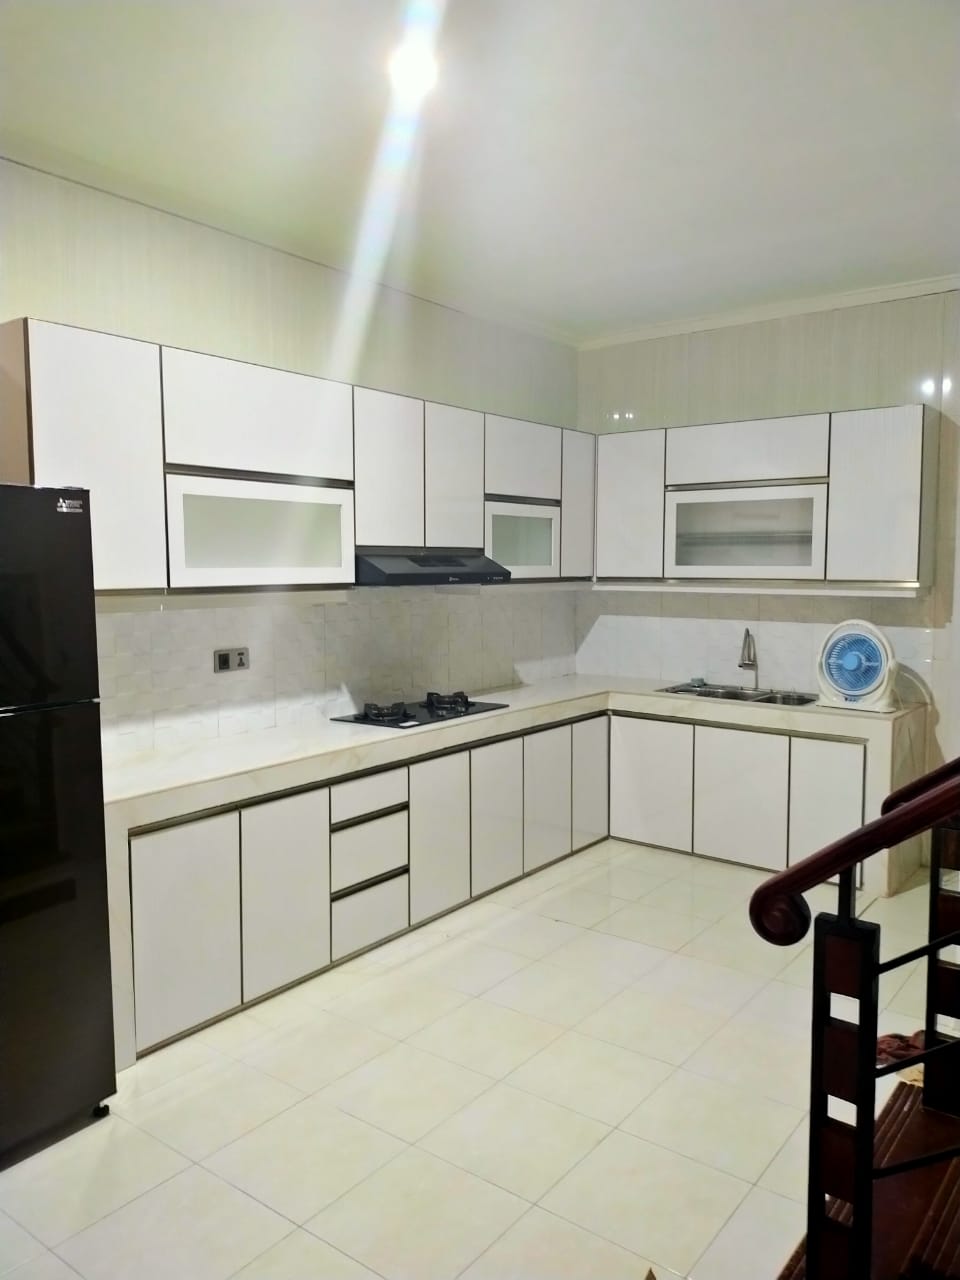 kitchen set minimalis terbaru 2020